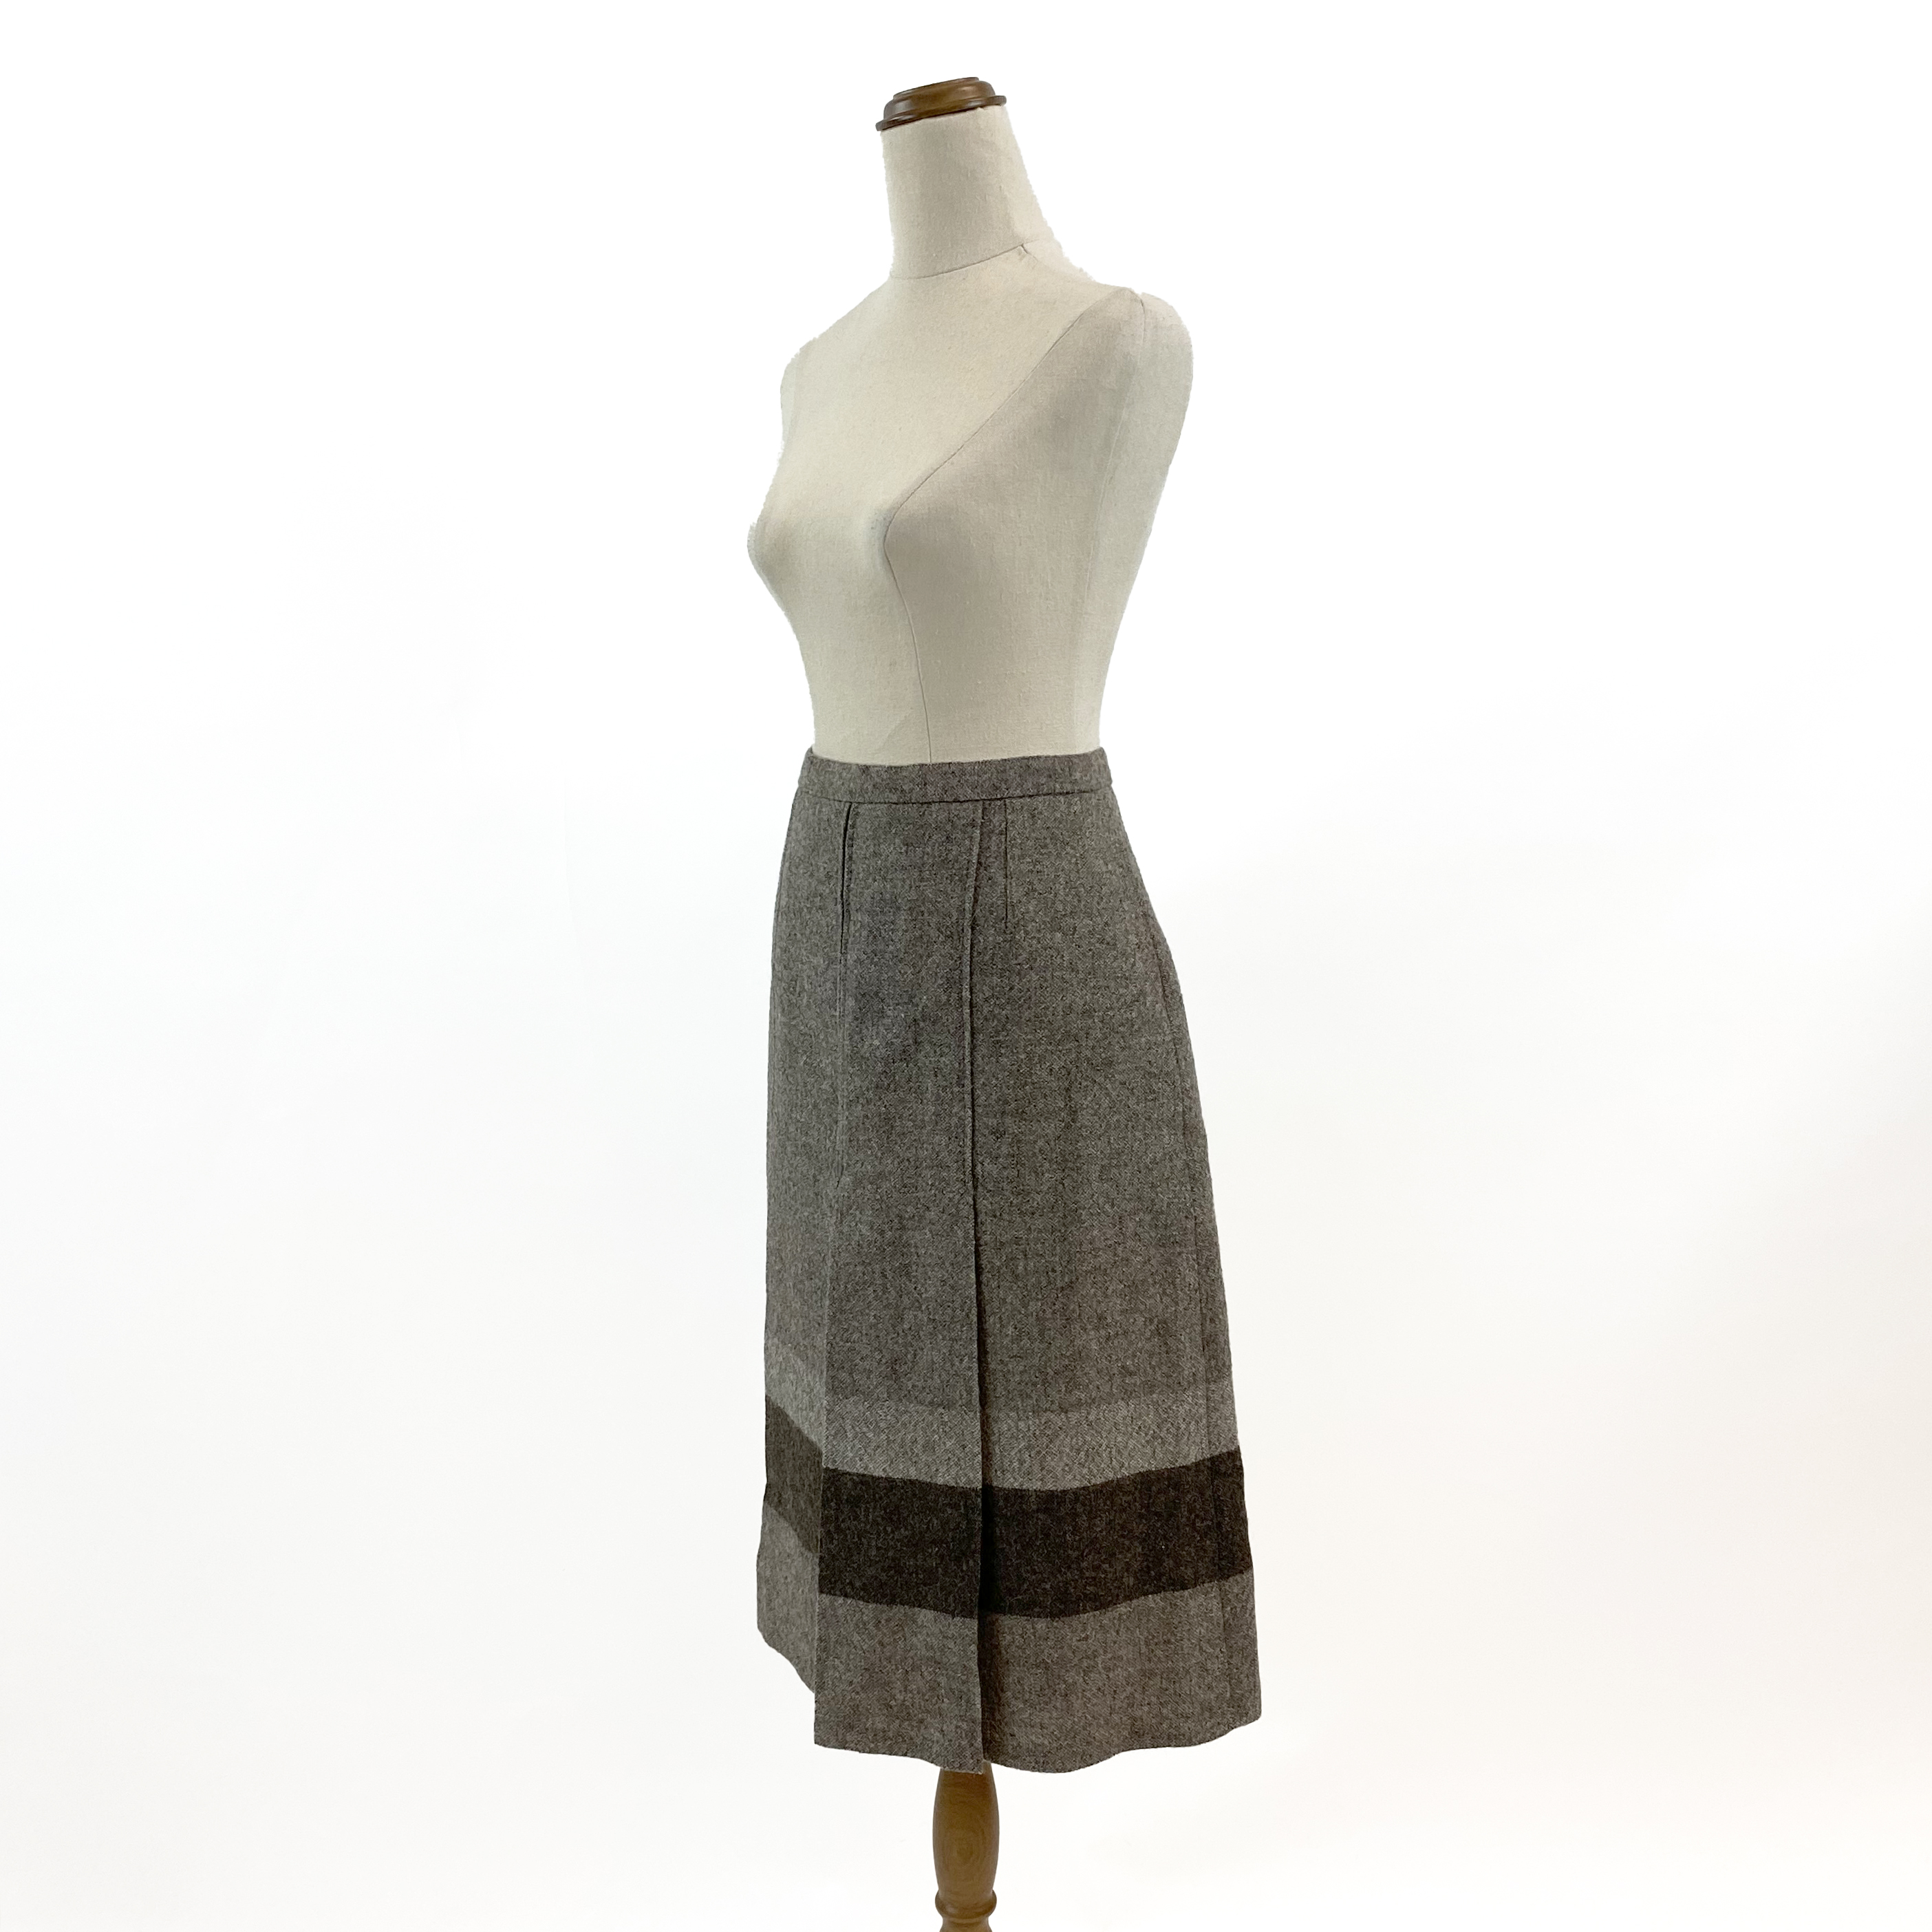 Vintage 70s Ashcroft Tweed Taupe/Beige Pleated Skirt